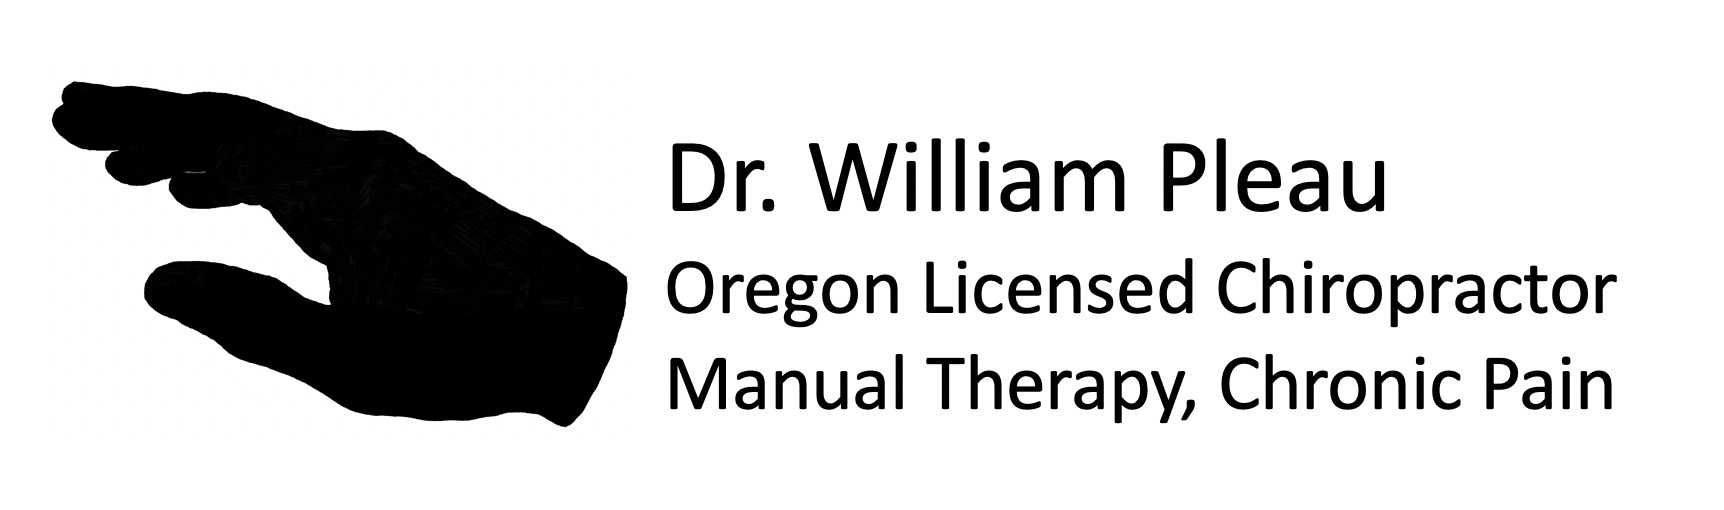 dr william pleau oregon chiropractor logo